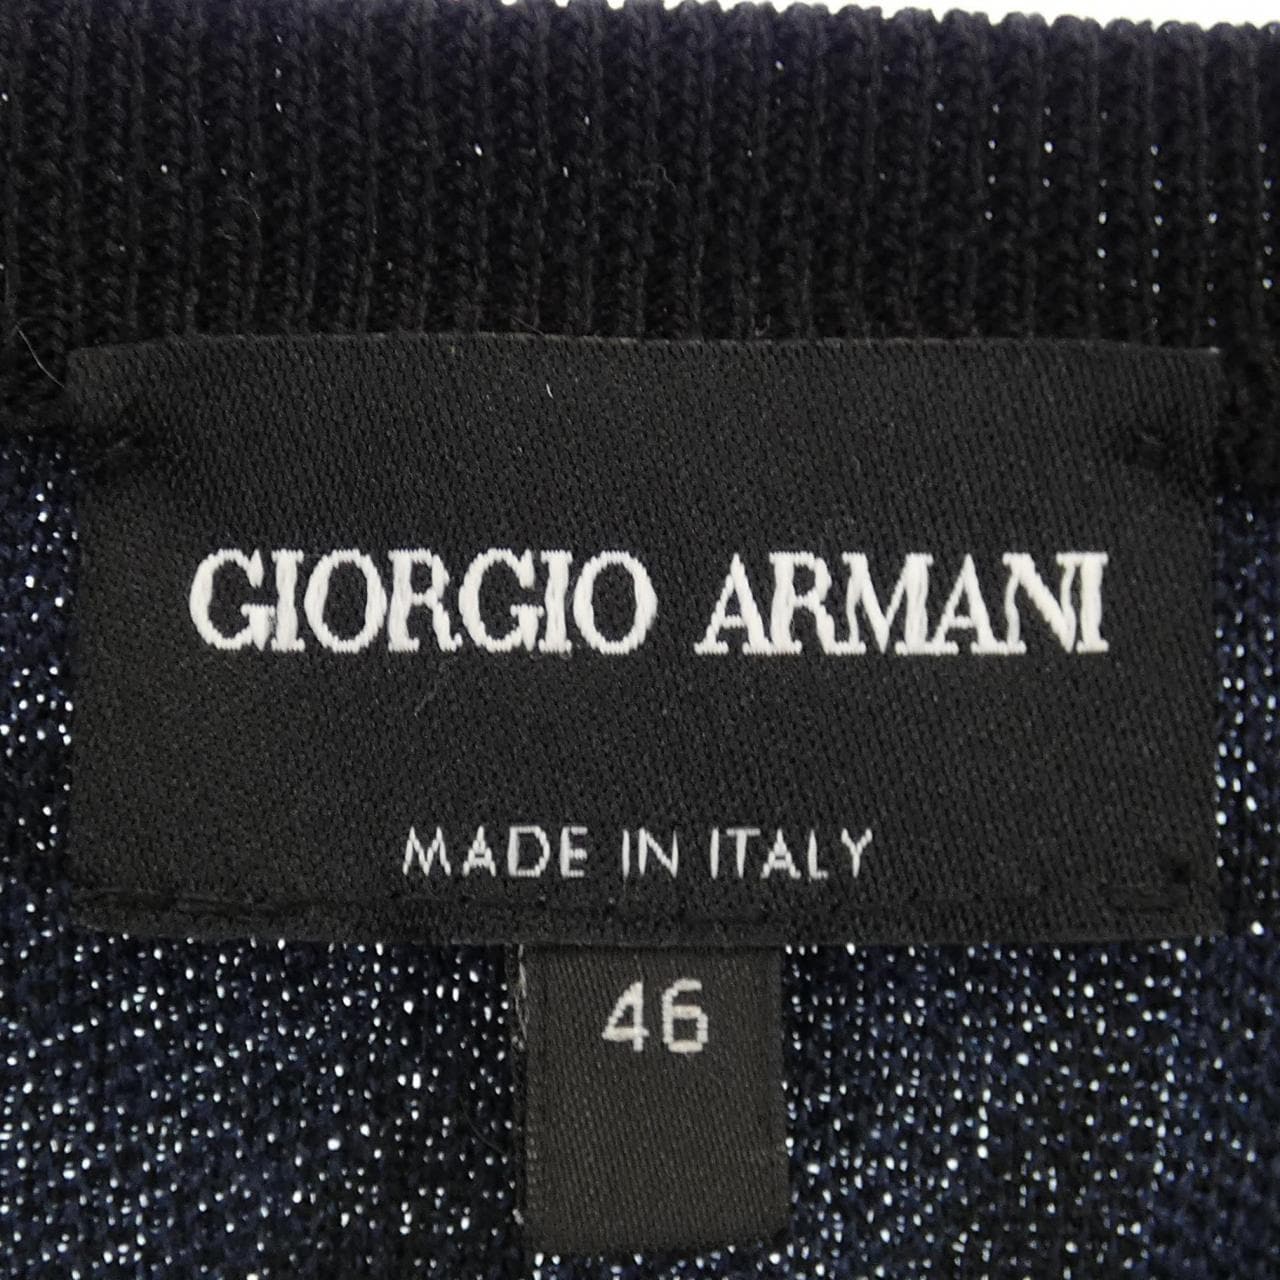 Giorgio Armani GIORGIO ARMANI針織衫